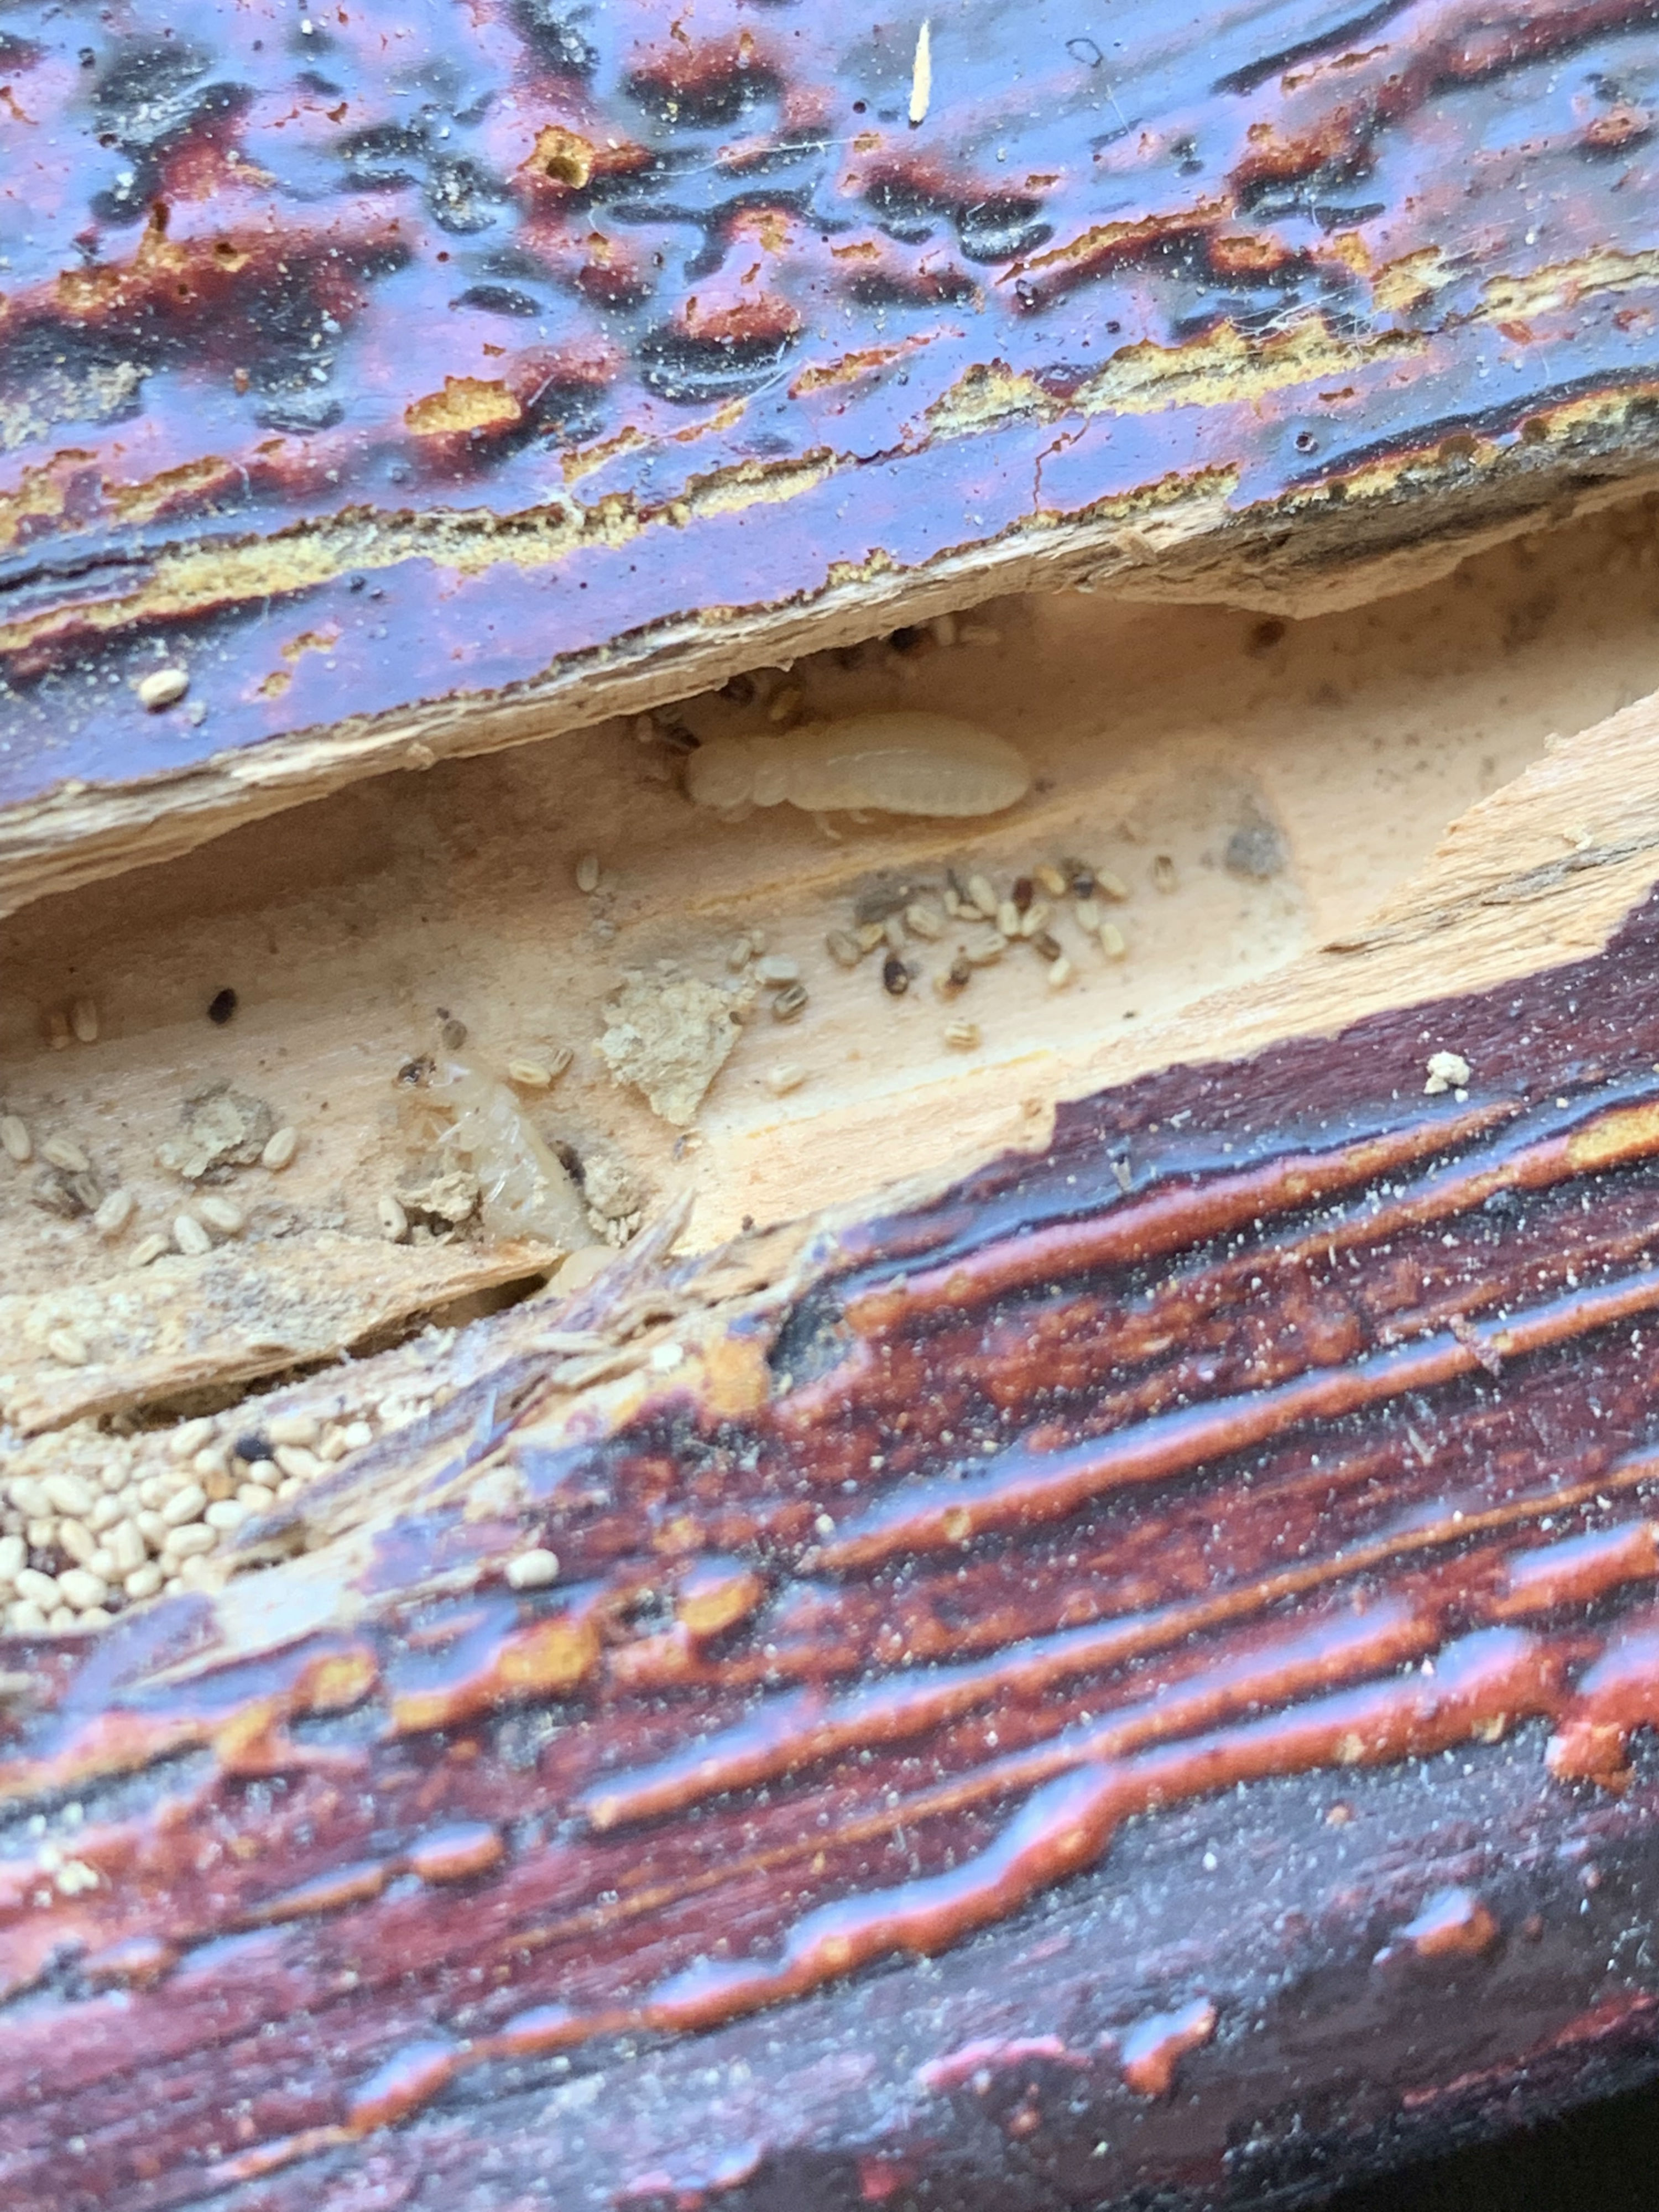 Dry Wood Termites